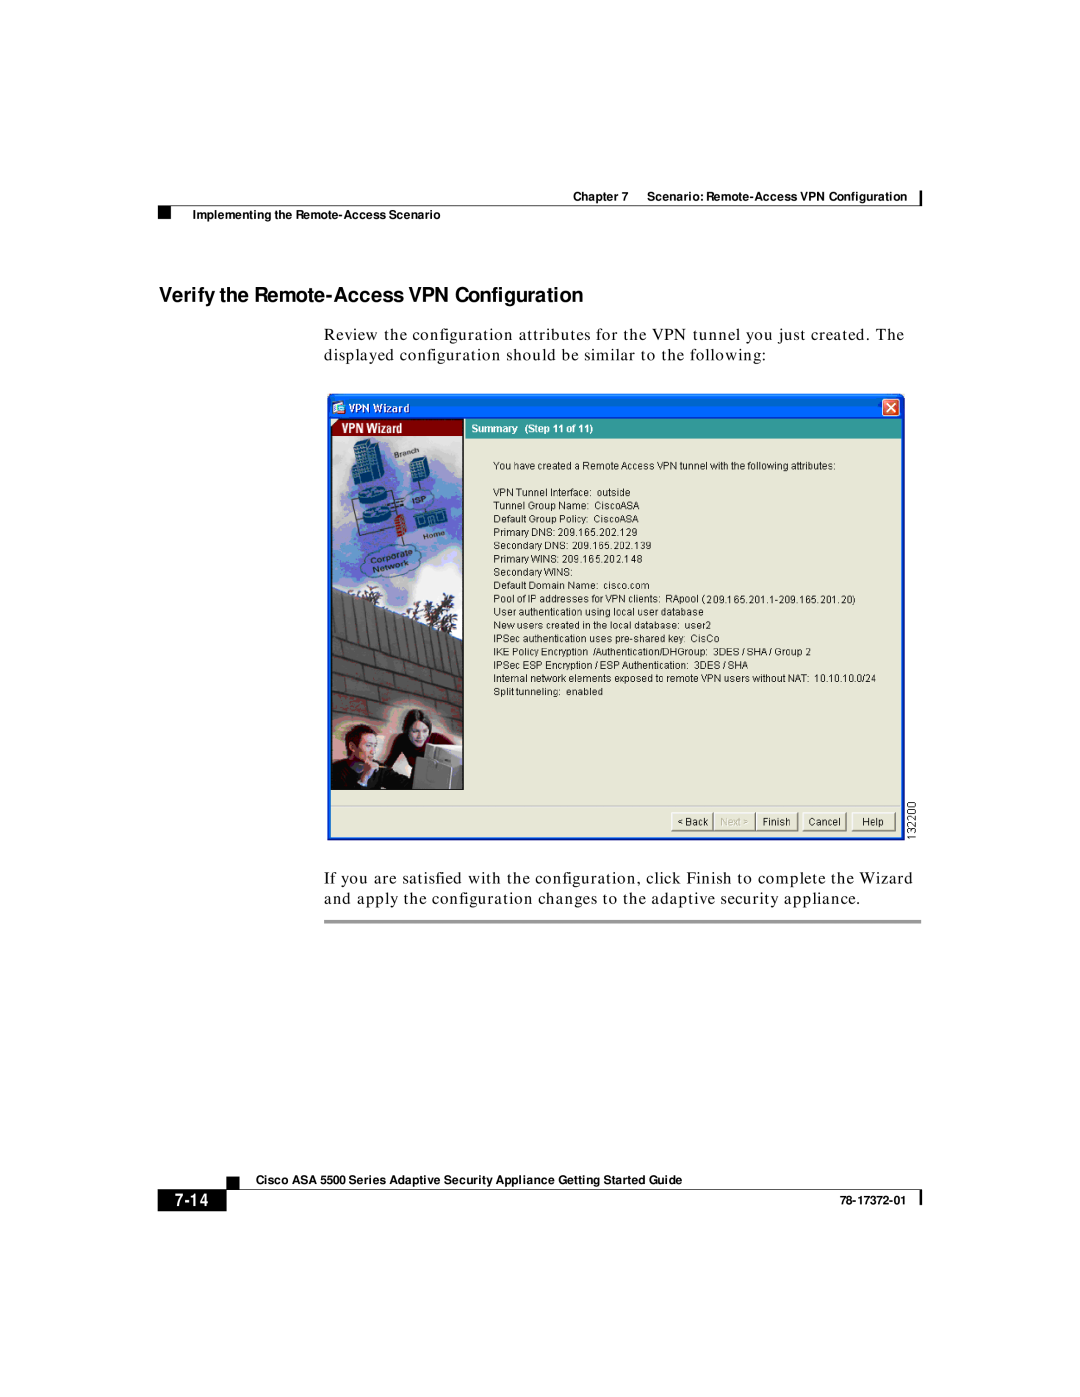 Cisco Systems ASA 5500 manual Verify the Remote-AccessVPN Configuration, 7-14 